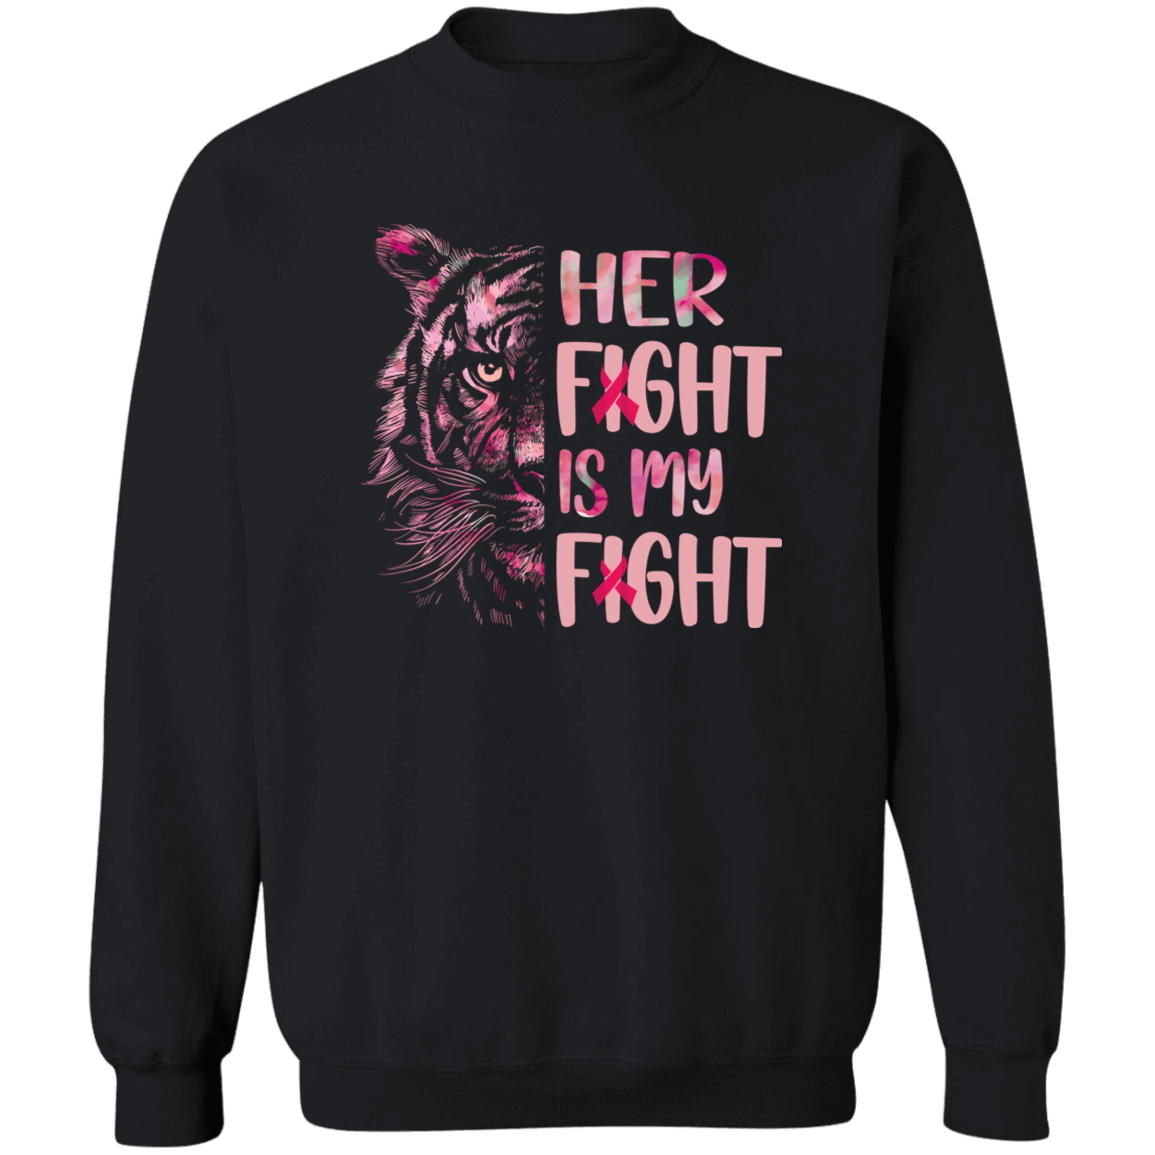 Her Fight Is My Fight Unisex Crewneck Pullover Sweatshirt